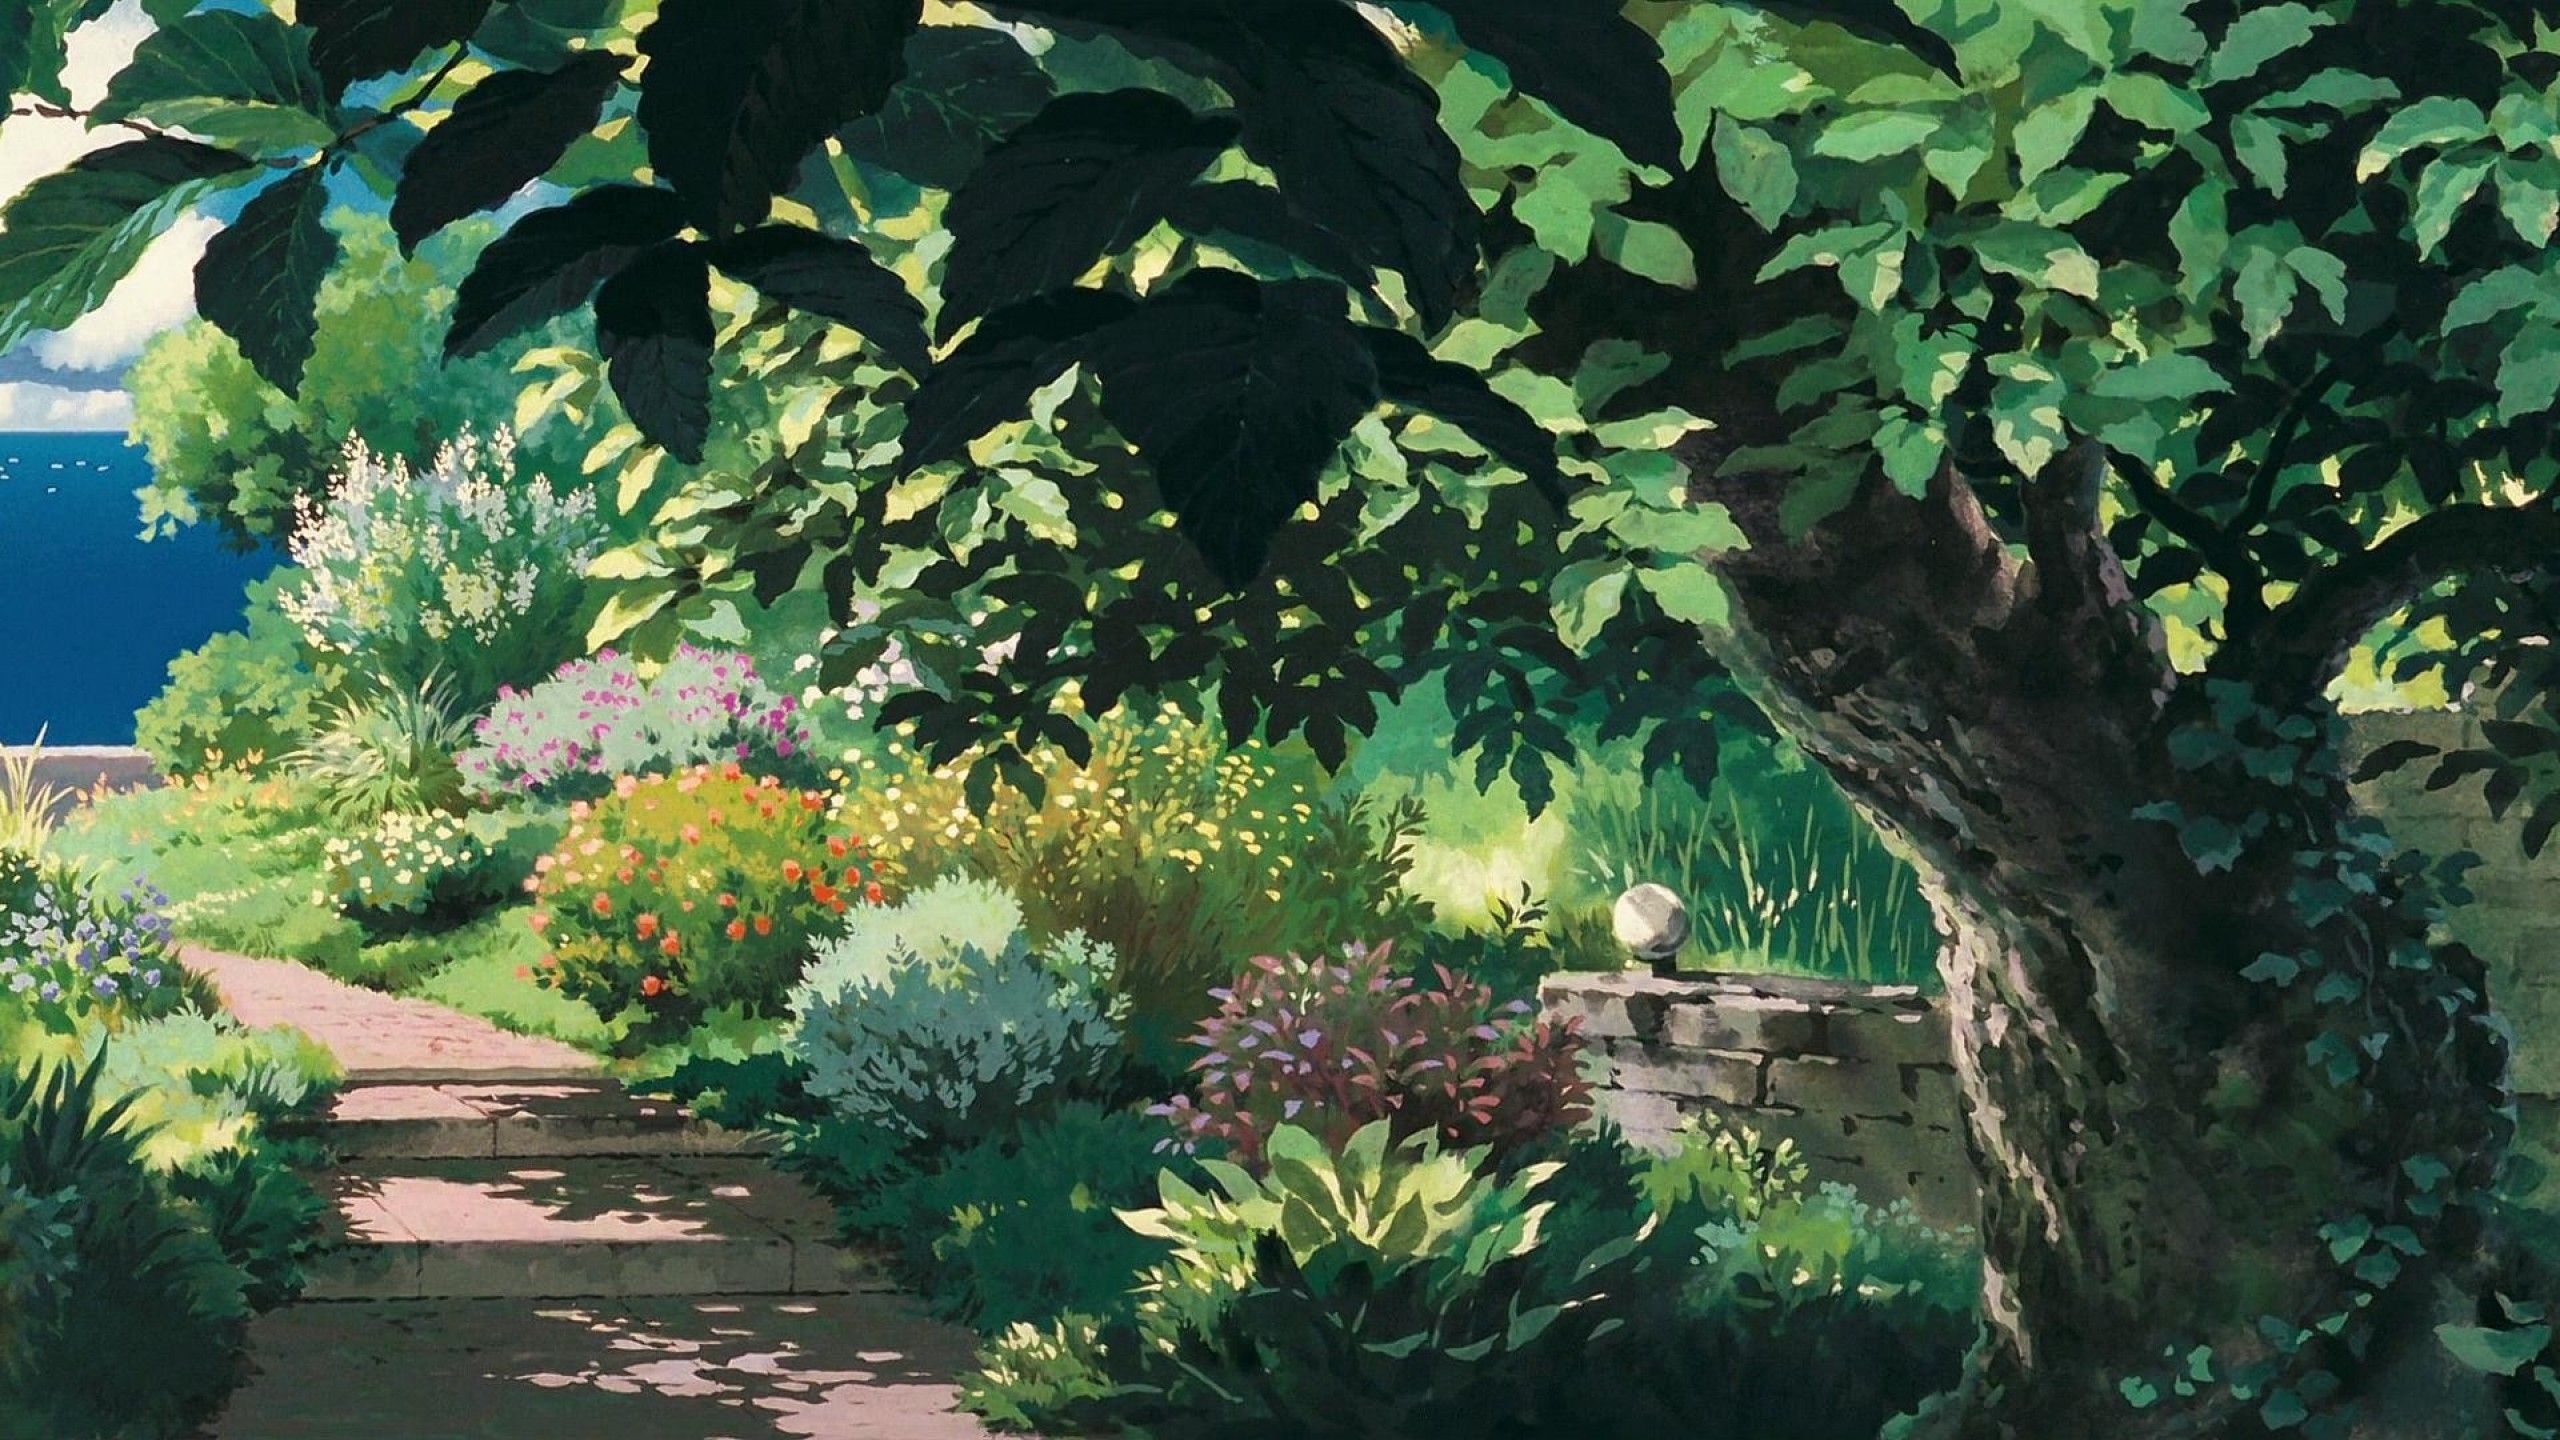 Download 2560x1440 Anime Landscape, Trees, Artwork, Scenic, Green, Foliage, Path Wallpaper for iMac 27 inch